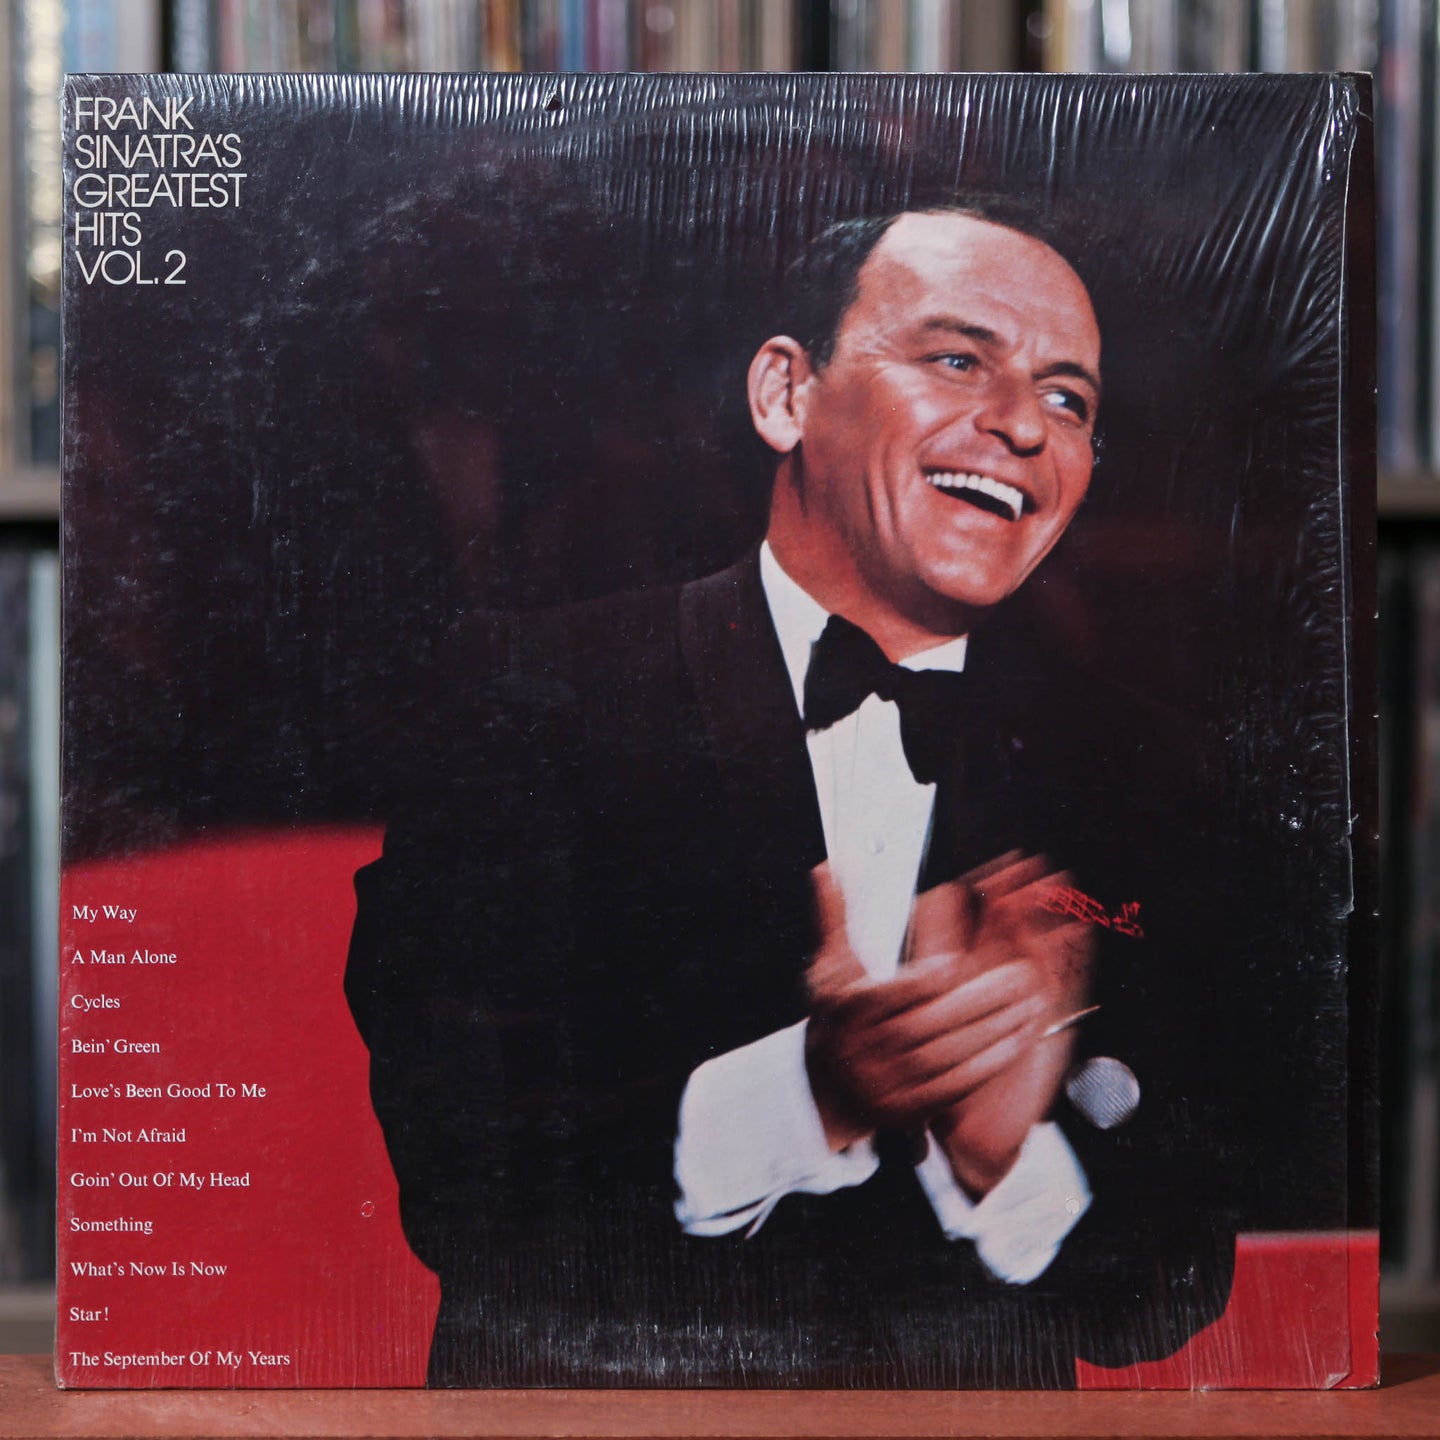 Frank Sinatra - Greatest Hits Vol. 2 - 1972 Reprise, VG+/EX w/Shrink